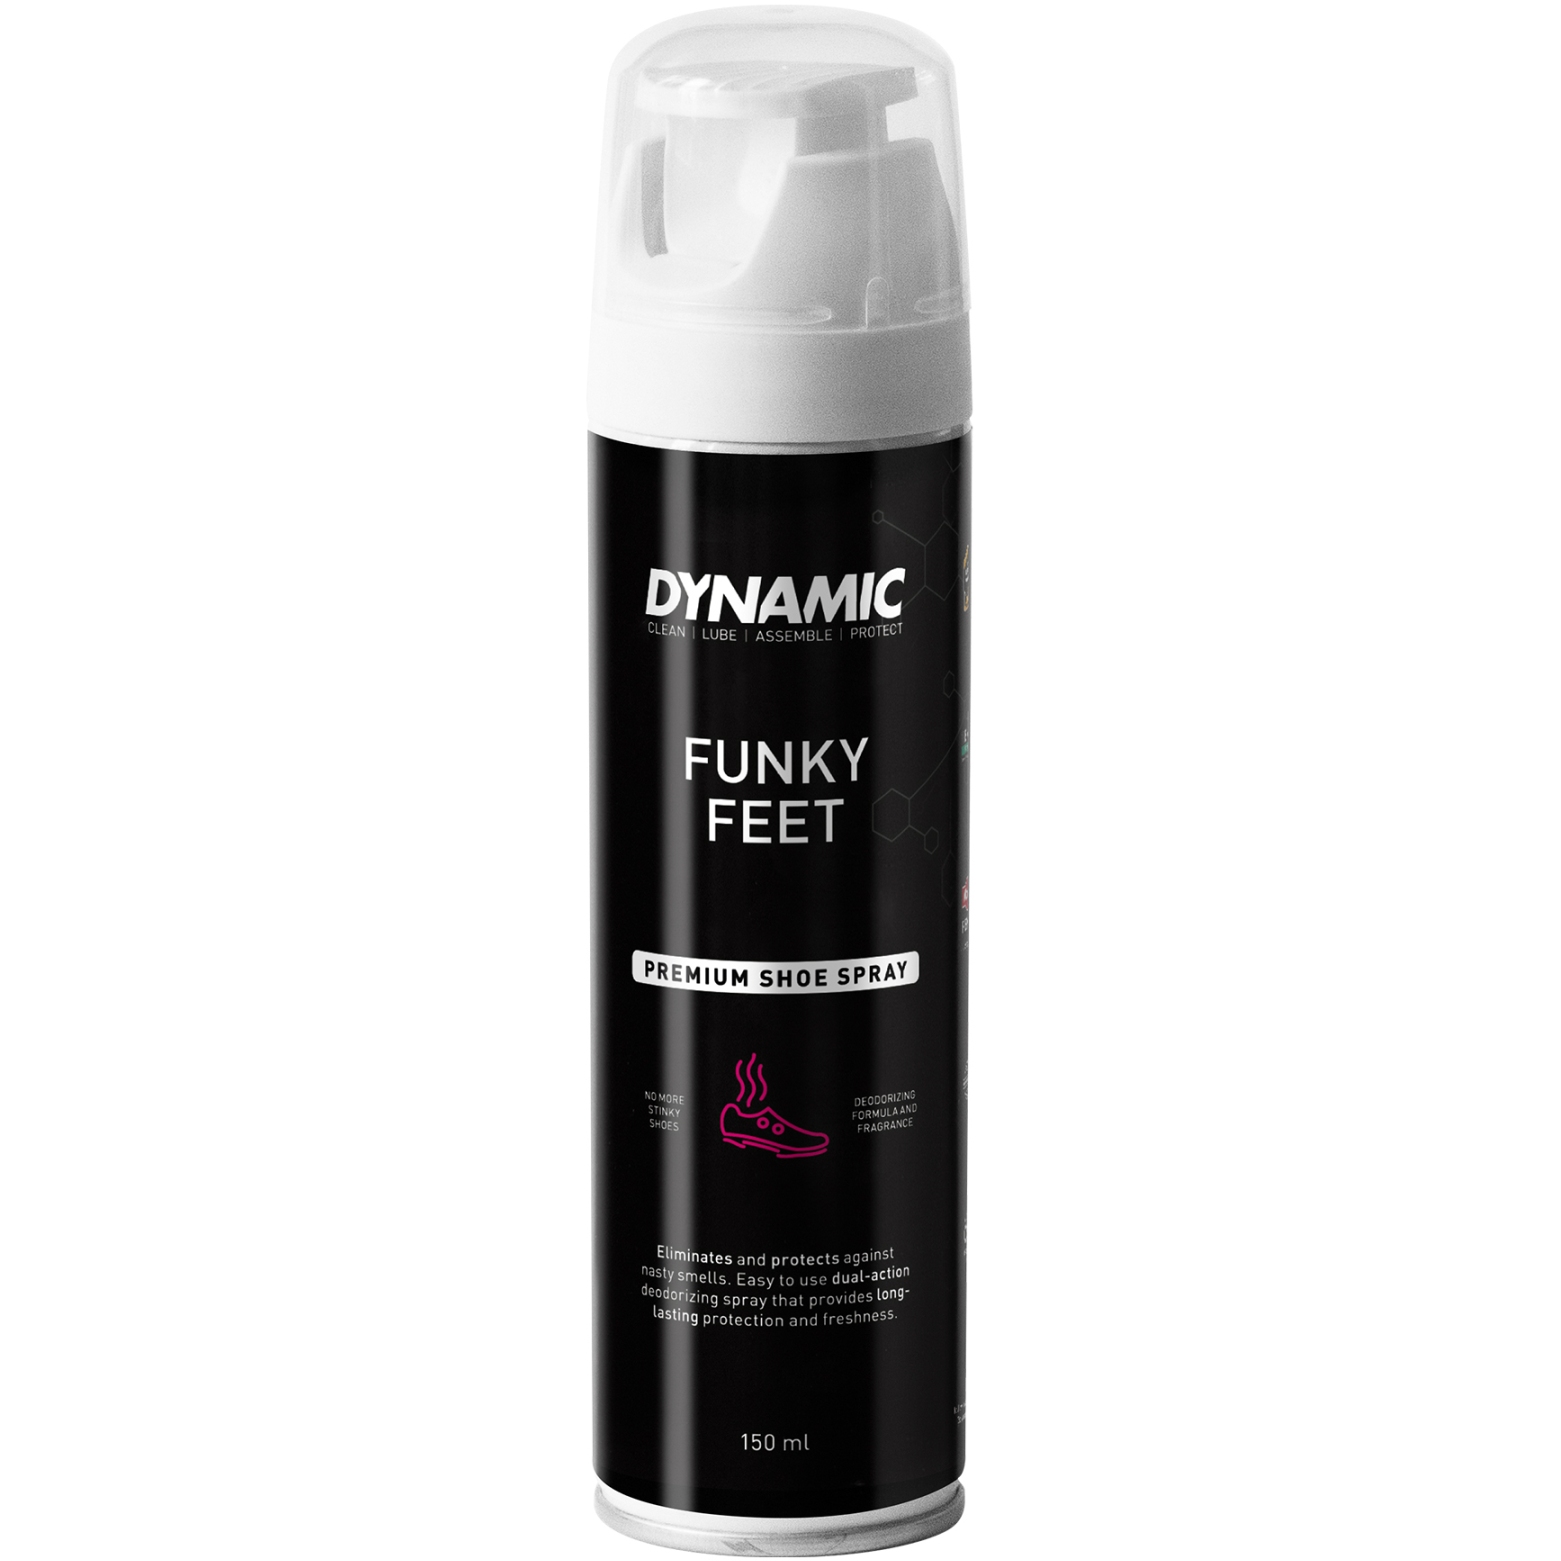 Foto de Dynamic Desodorante Calzado - Funky Feet Premium - 150ml